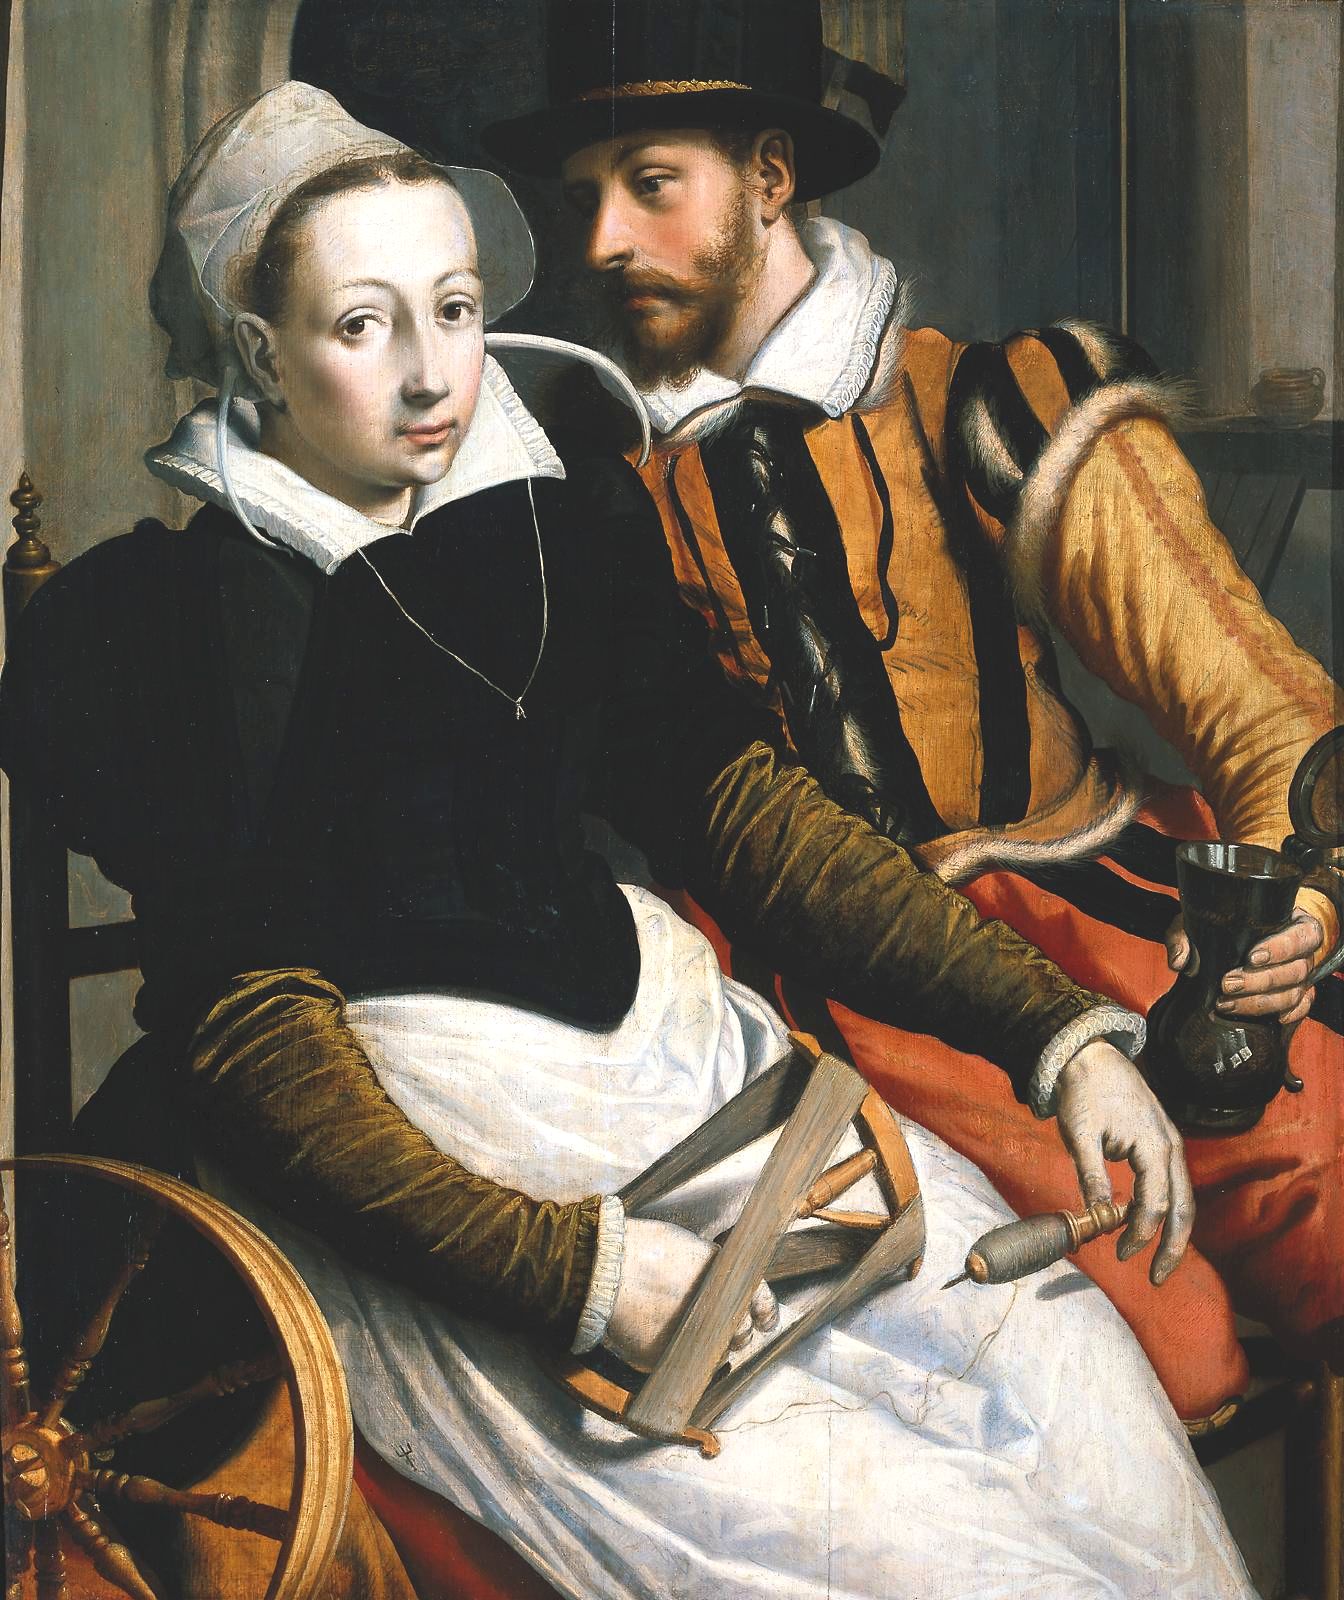 Man And Woman by Pieter Pietersz, c.1570